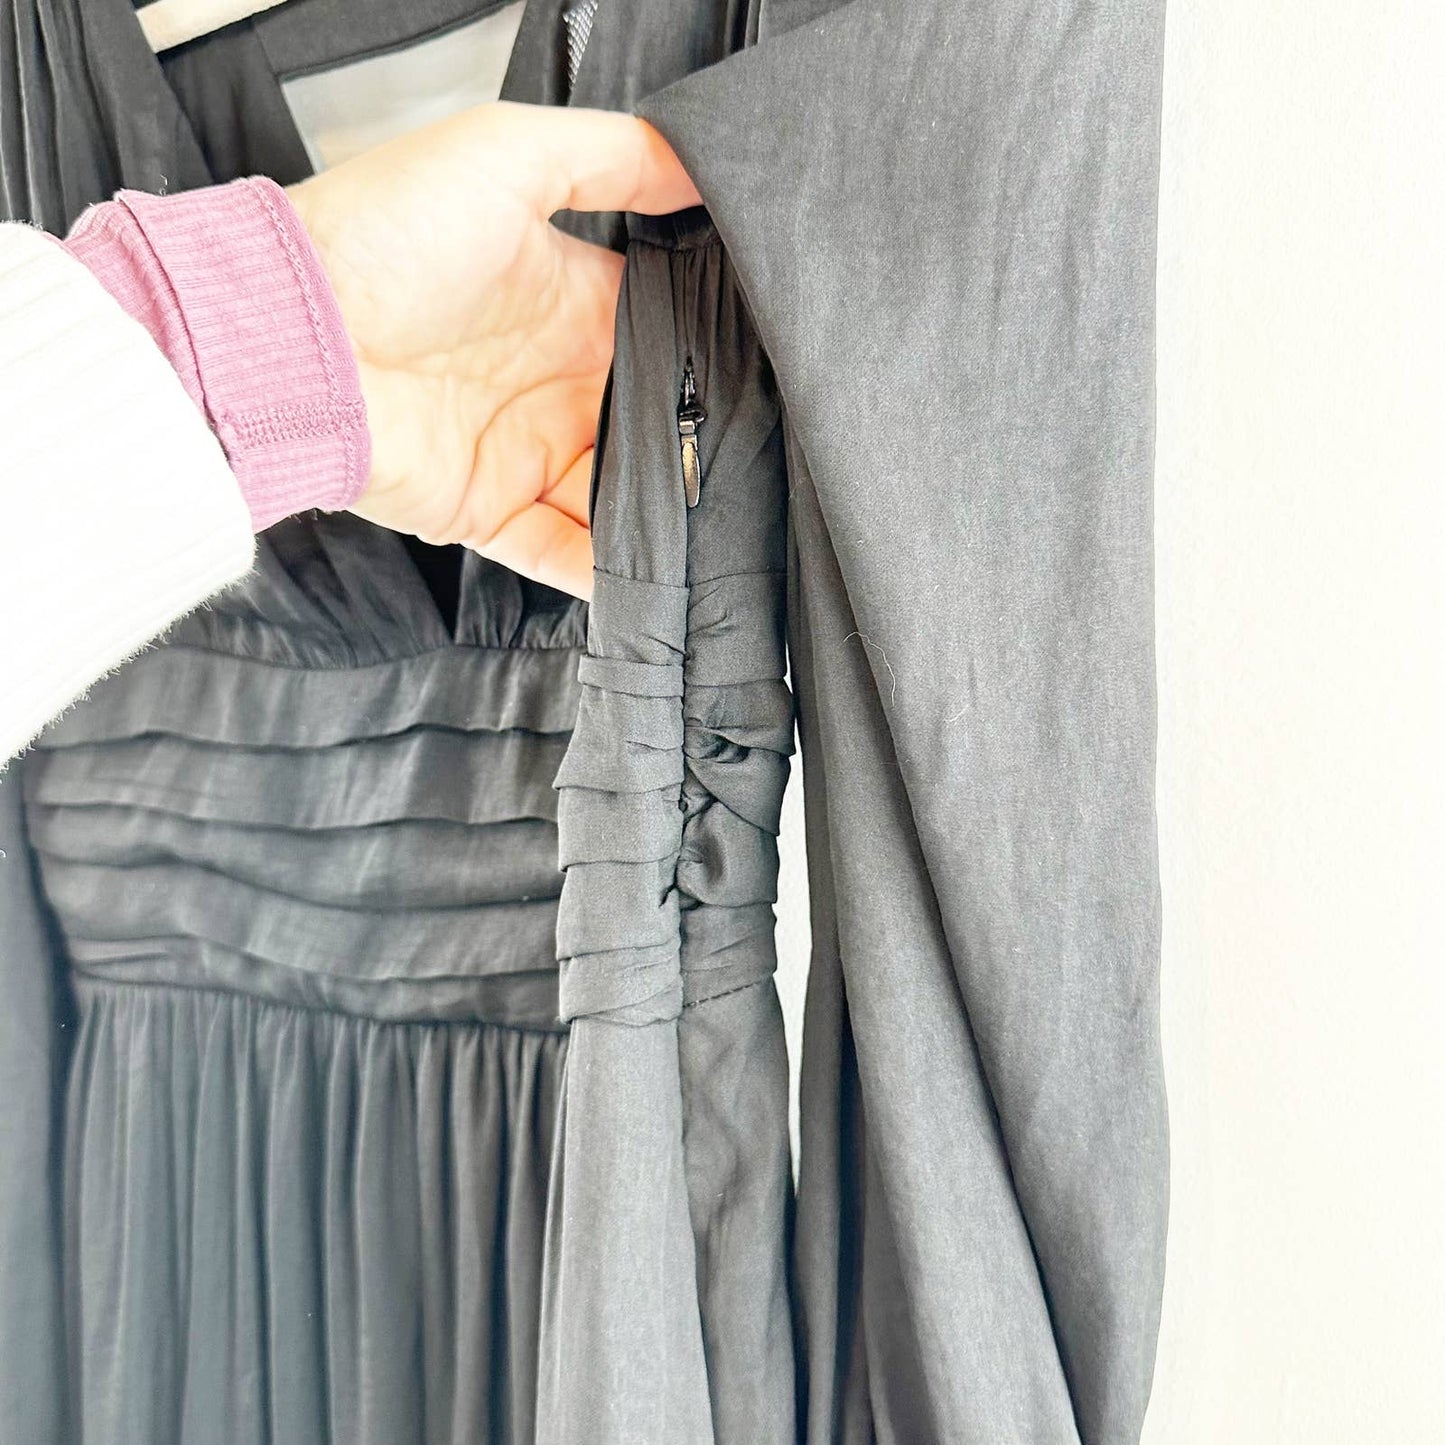 Anthropologie Gwendolyn V Neck Long Sleeve Midi Dress Black 2 Petite